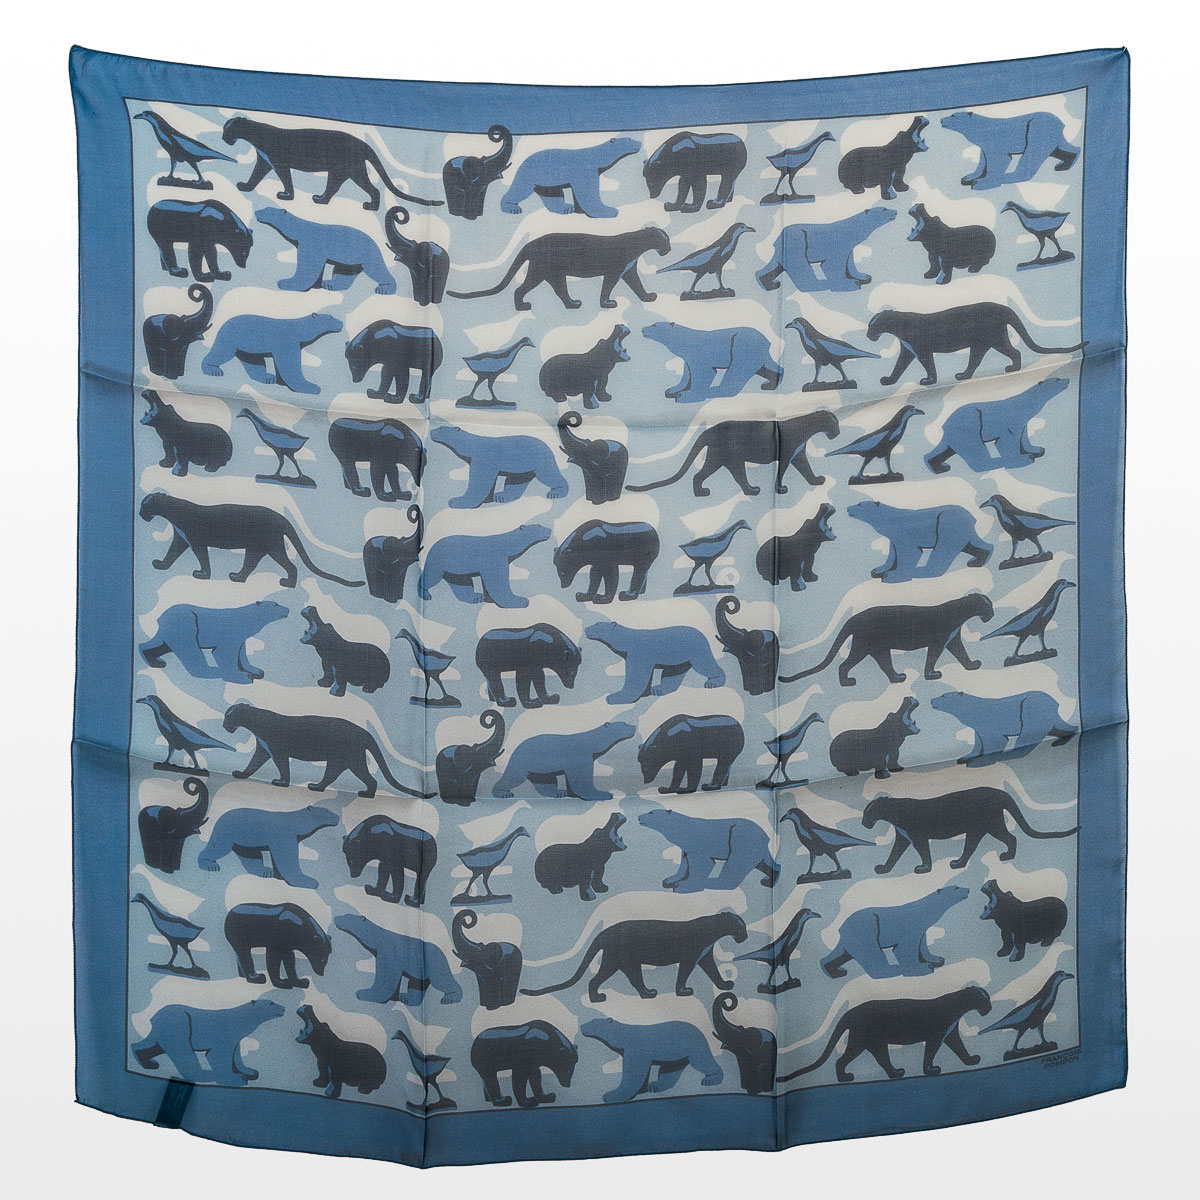 Jean Pompon Square scarf - Les animaux (blue) (unfolded)